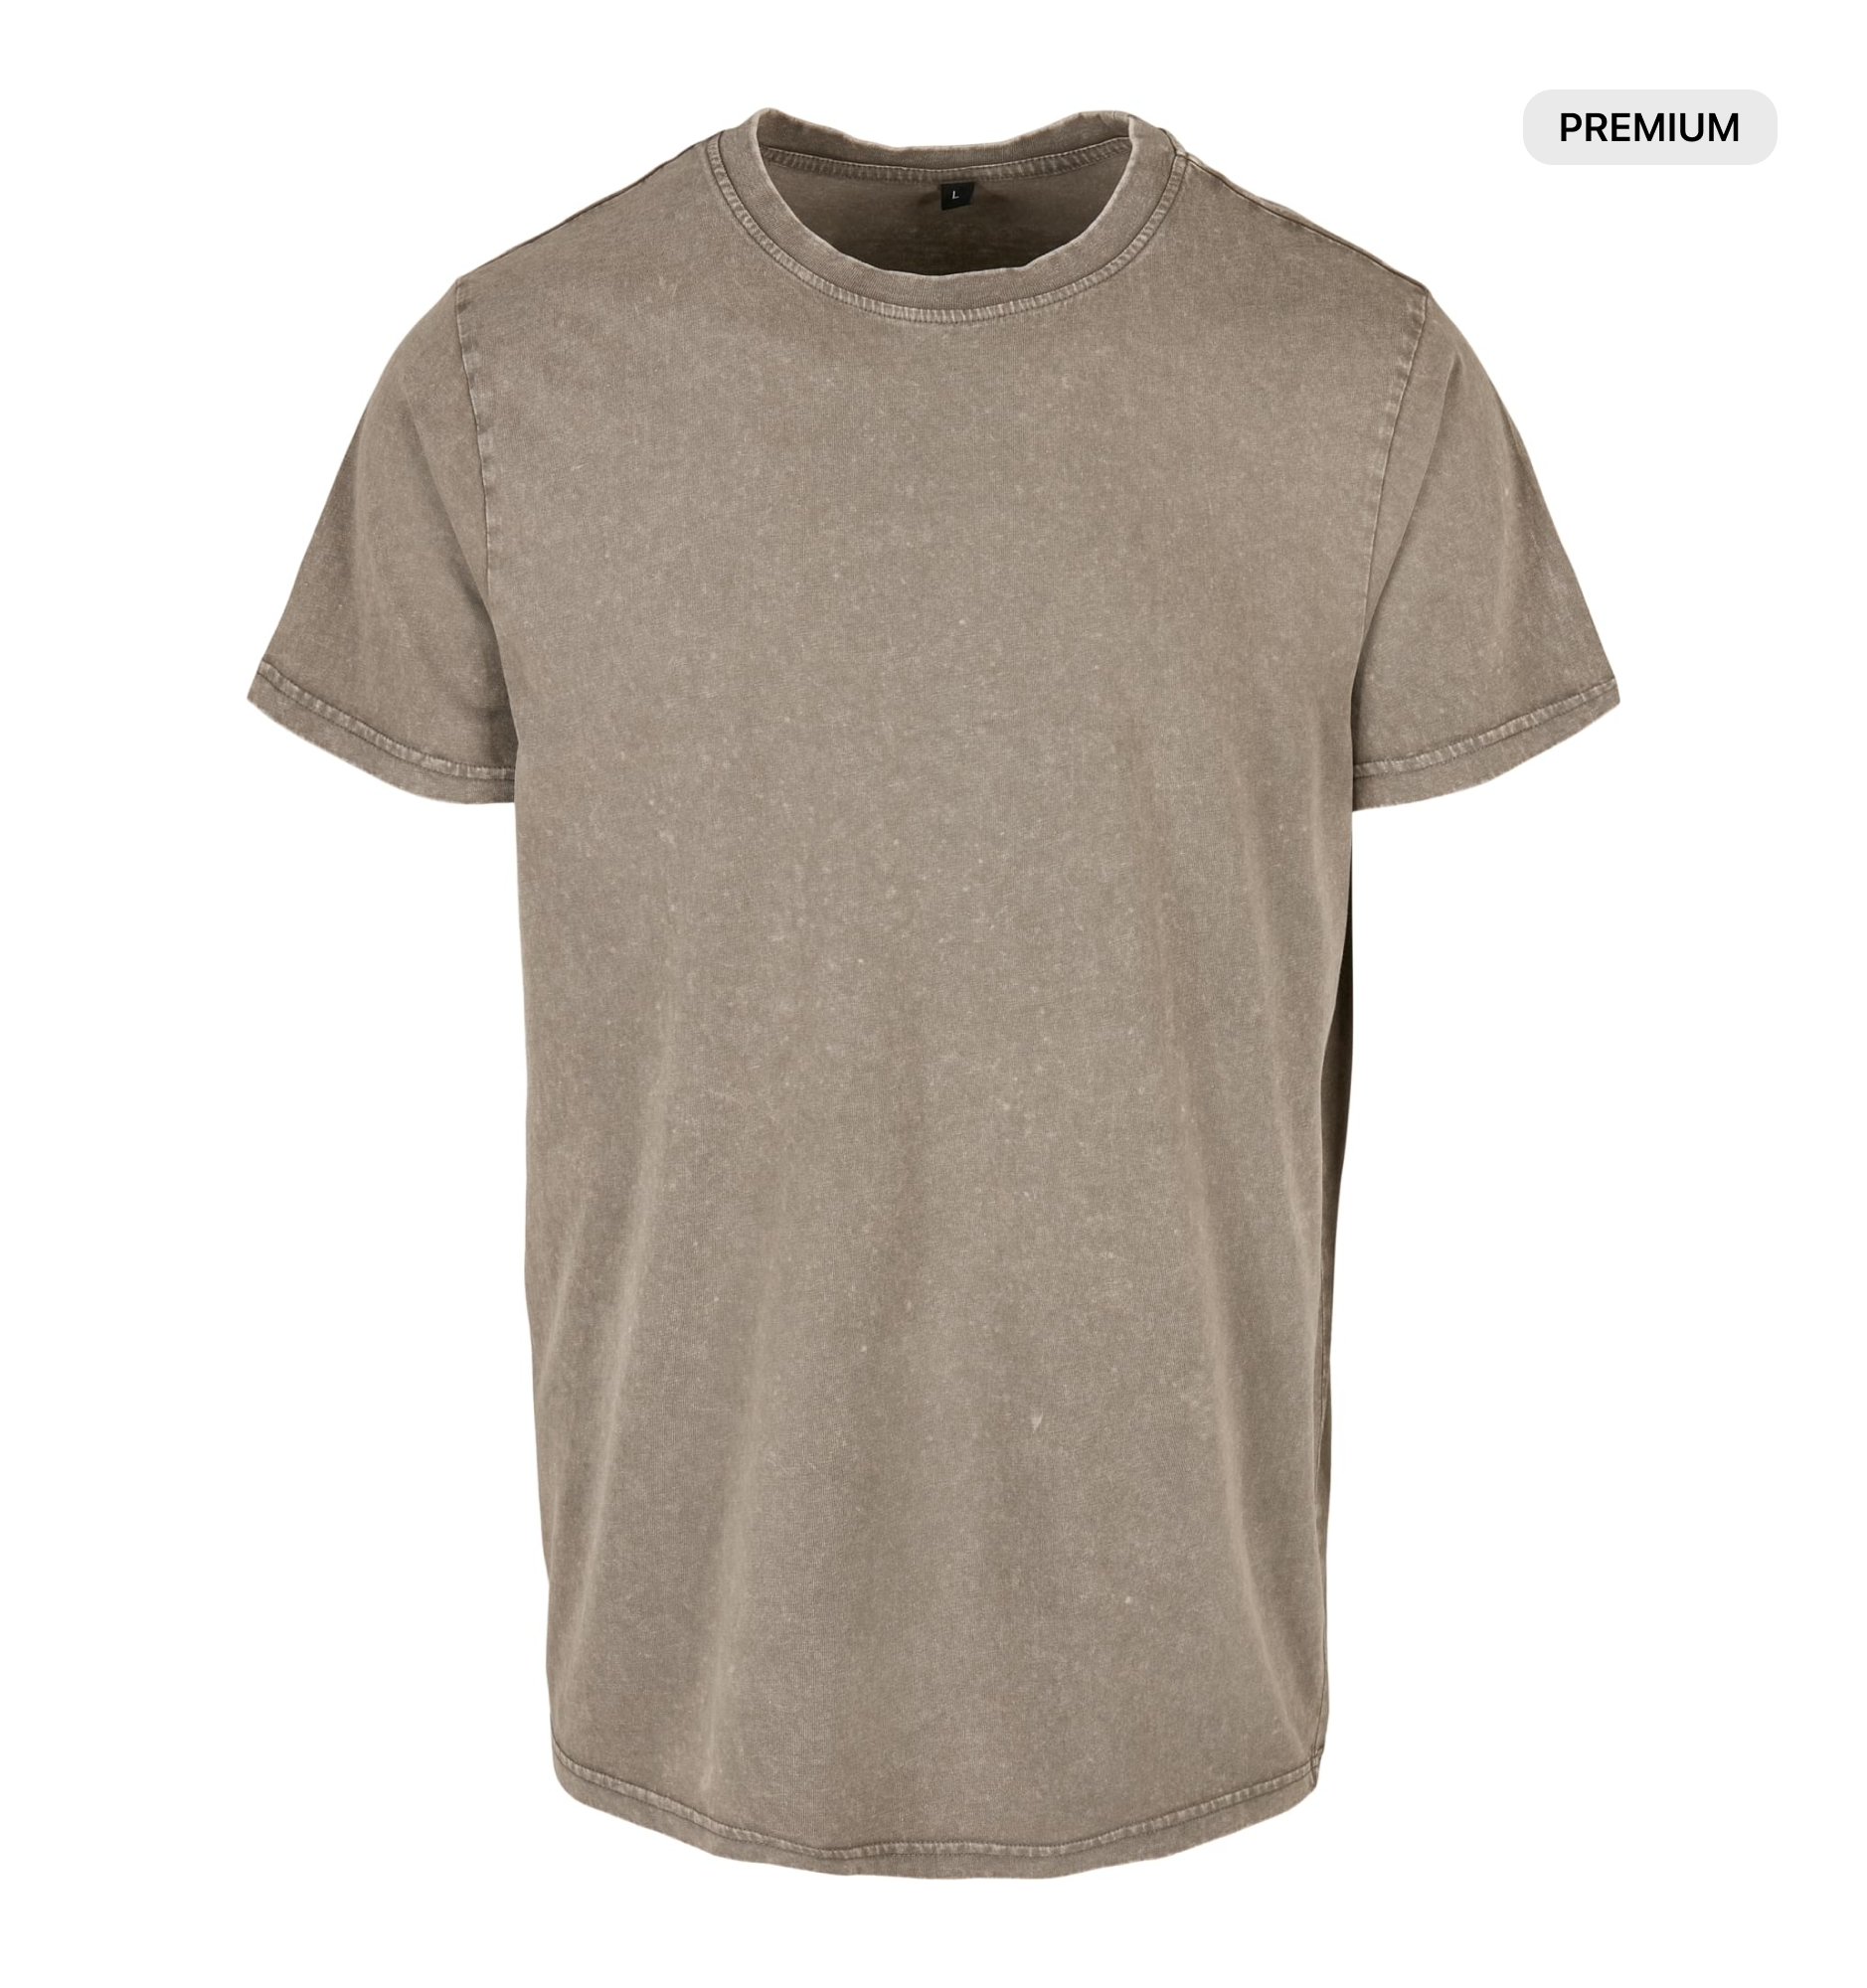 T-Shirt/Premium (acid wash)